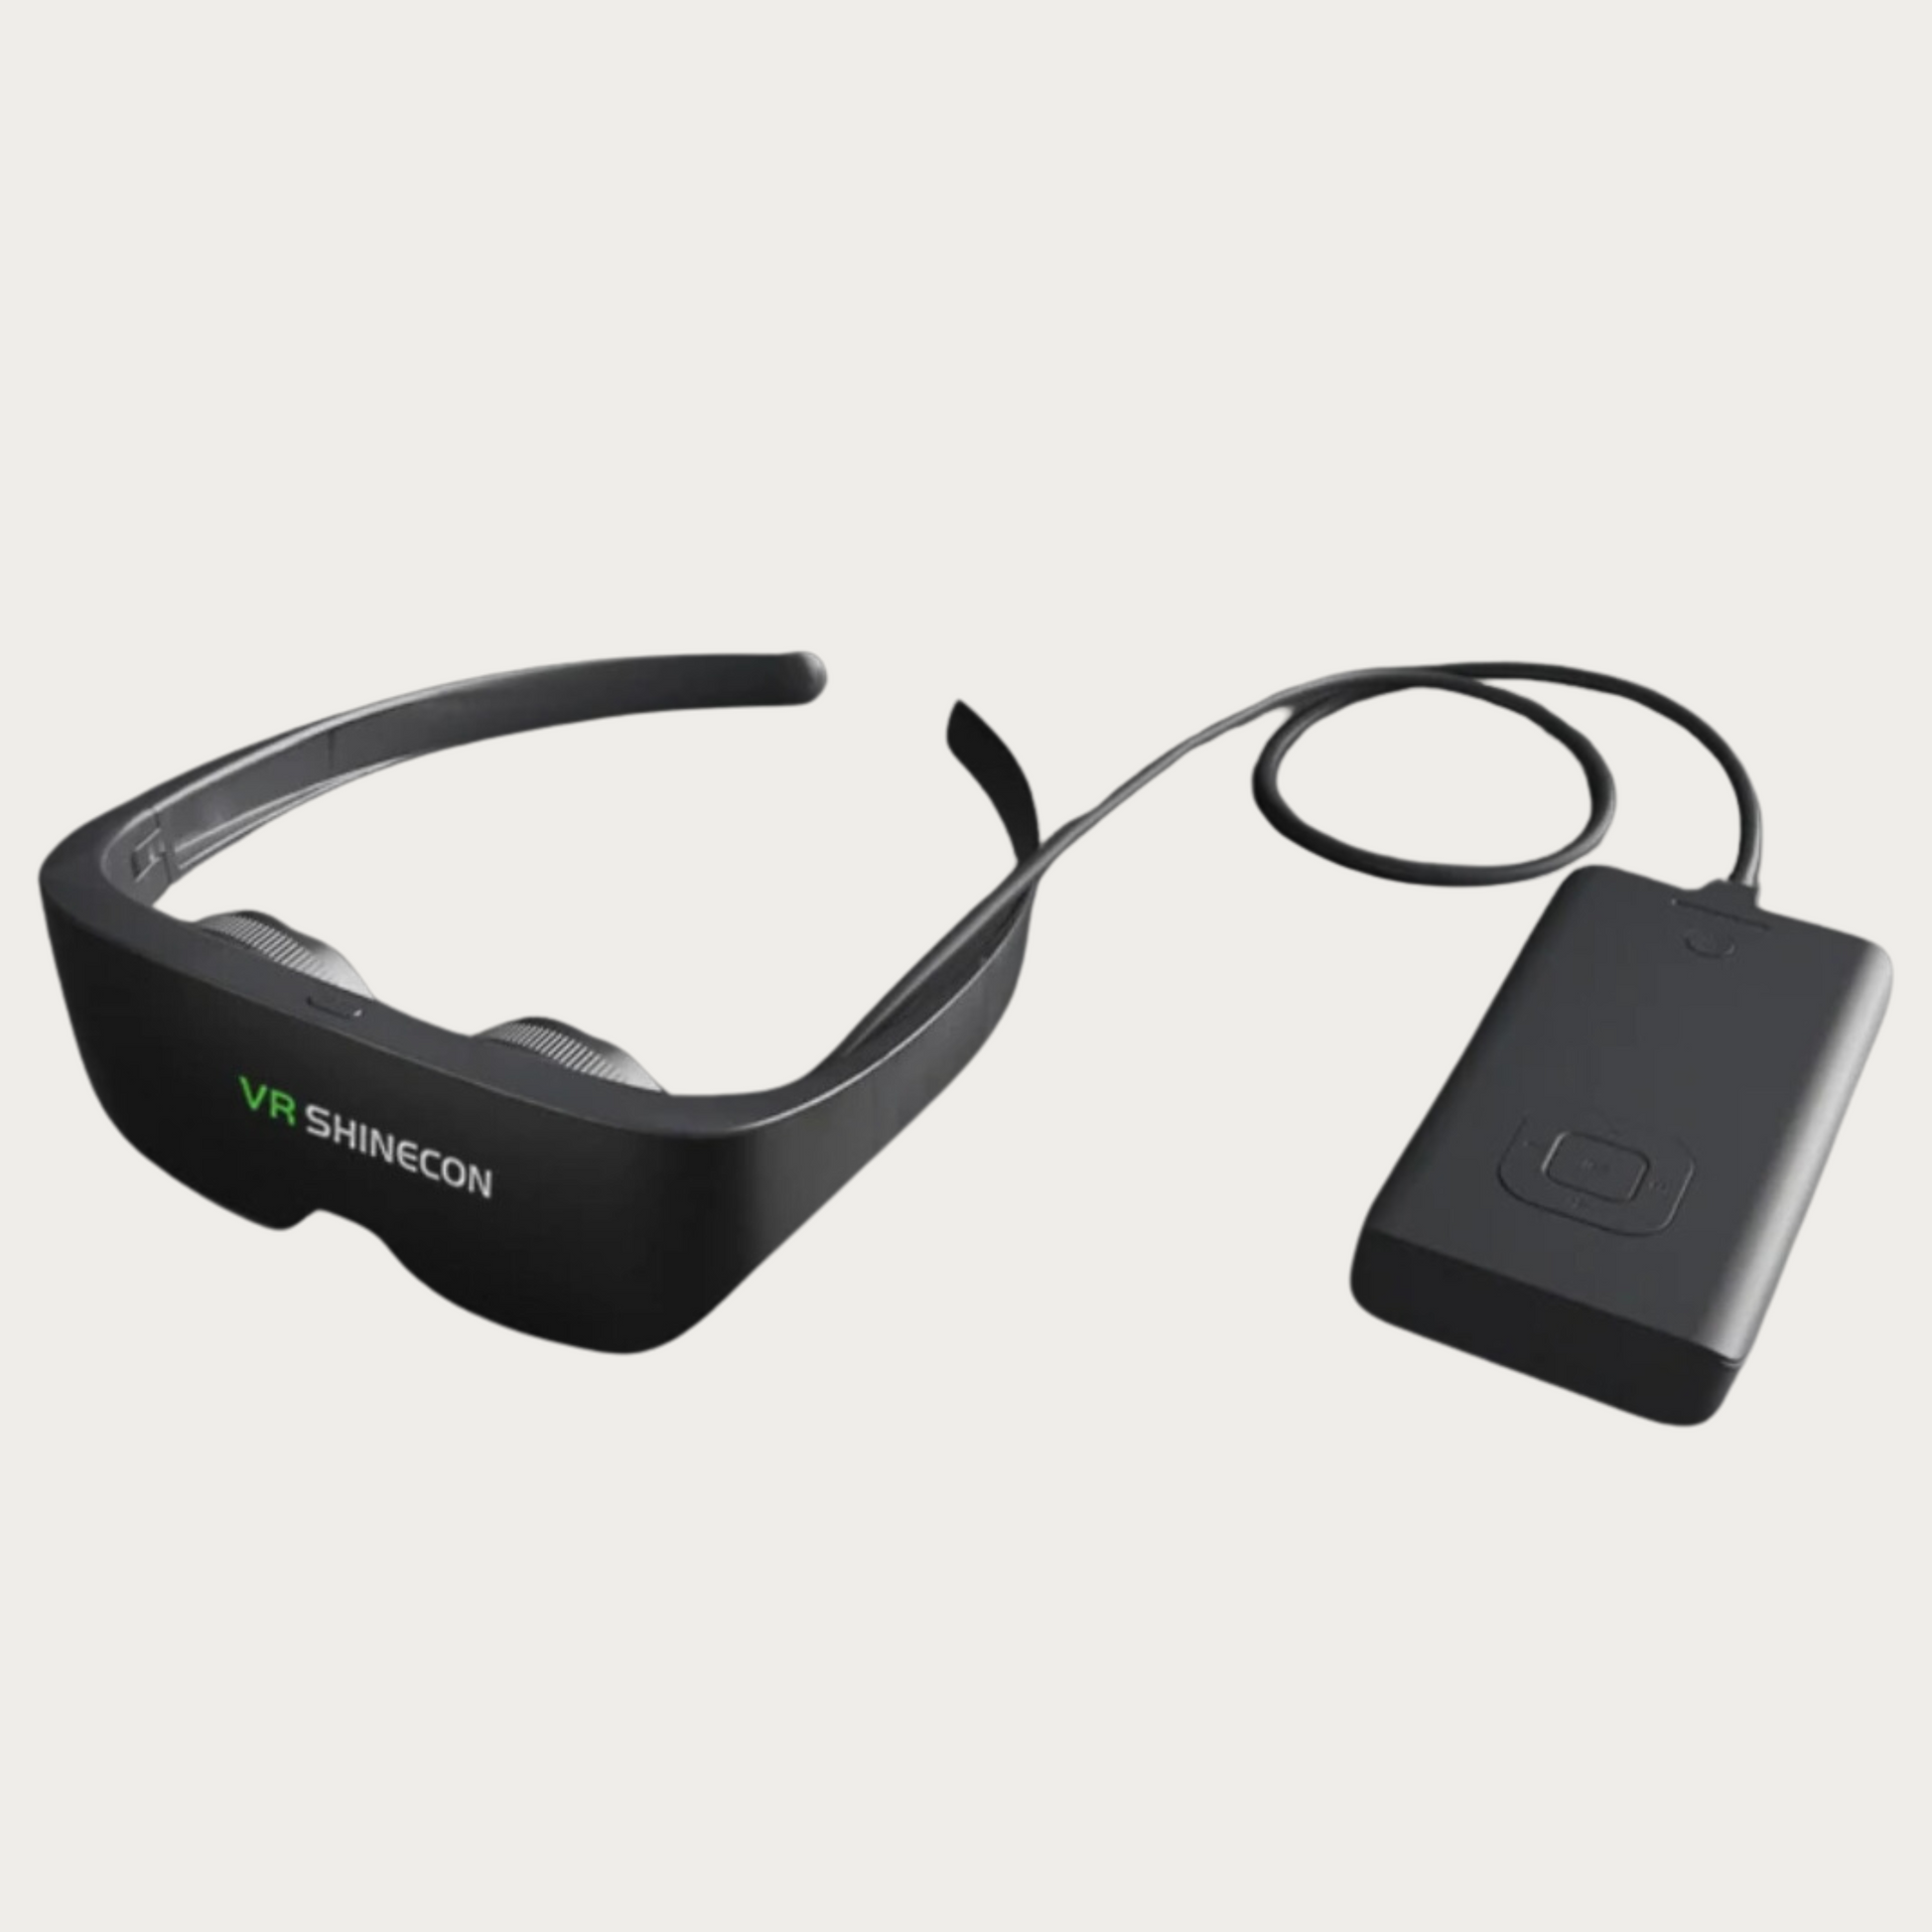  New Upgraded VR Shinecon Smart 4K Glasses